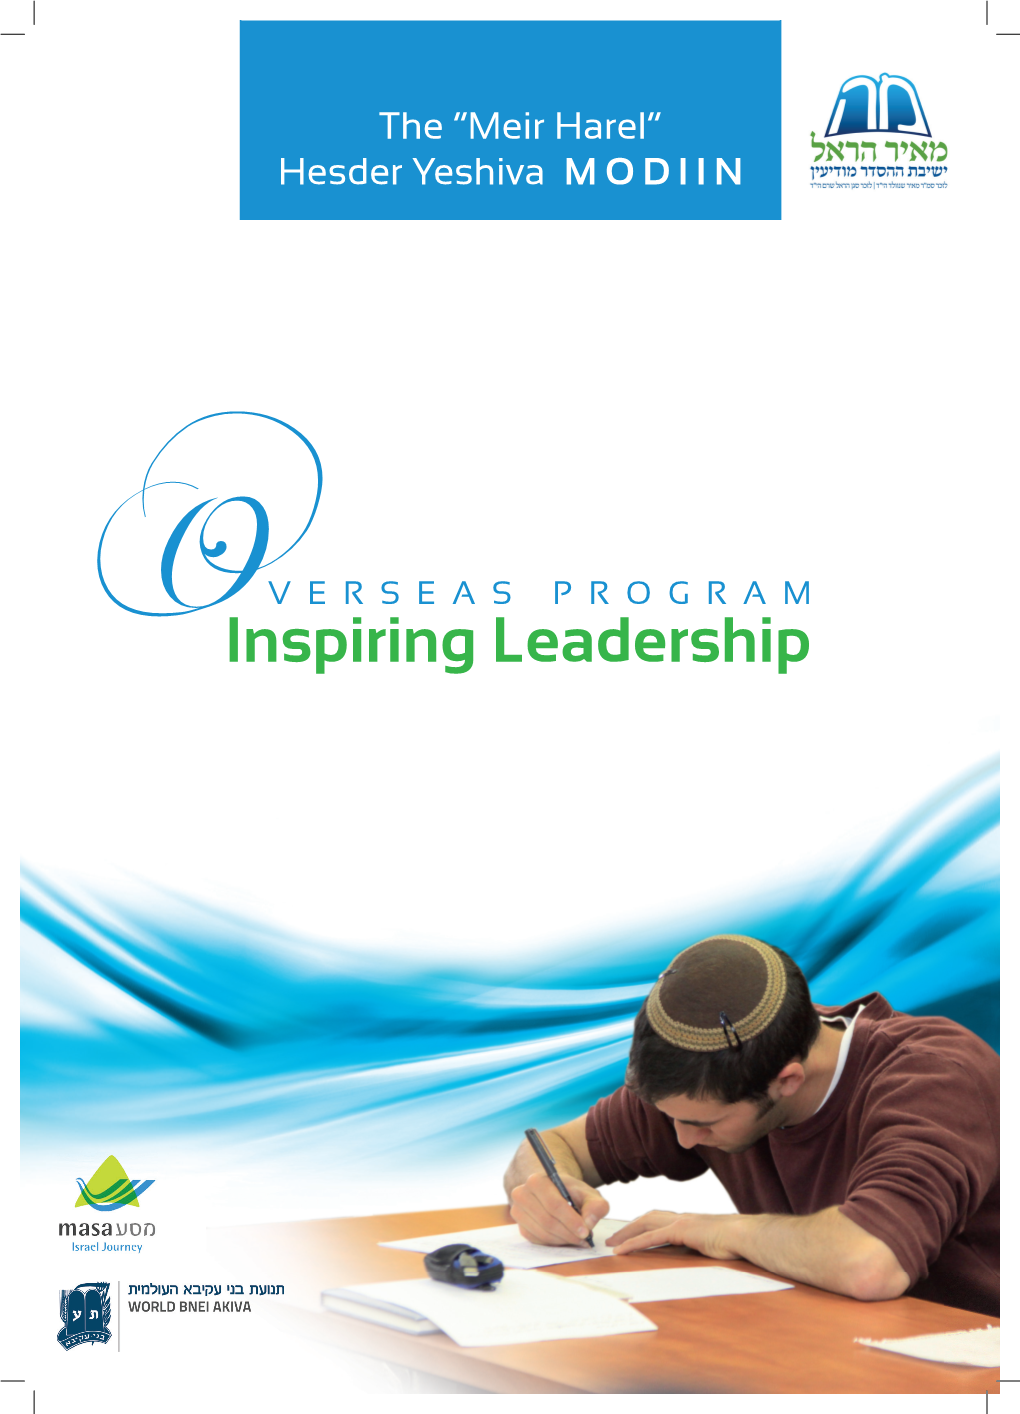 Oinspiring Leadership ABOUT the YESHIVA